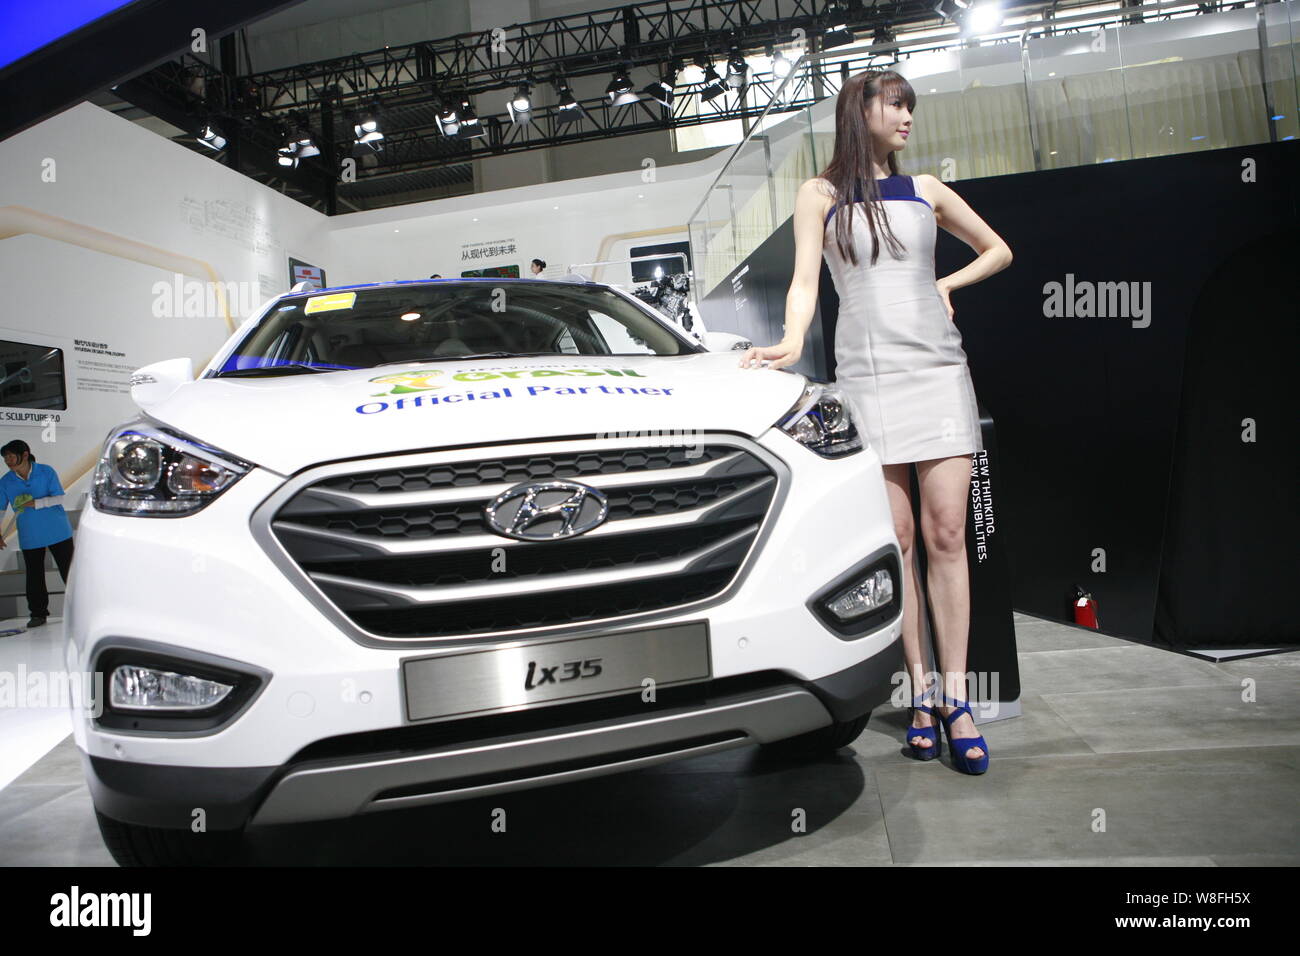 Hyundai ix35 hi-res stock photography and images - Alamy